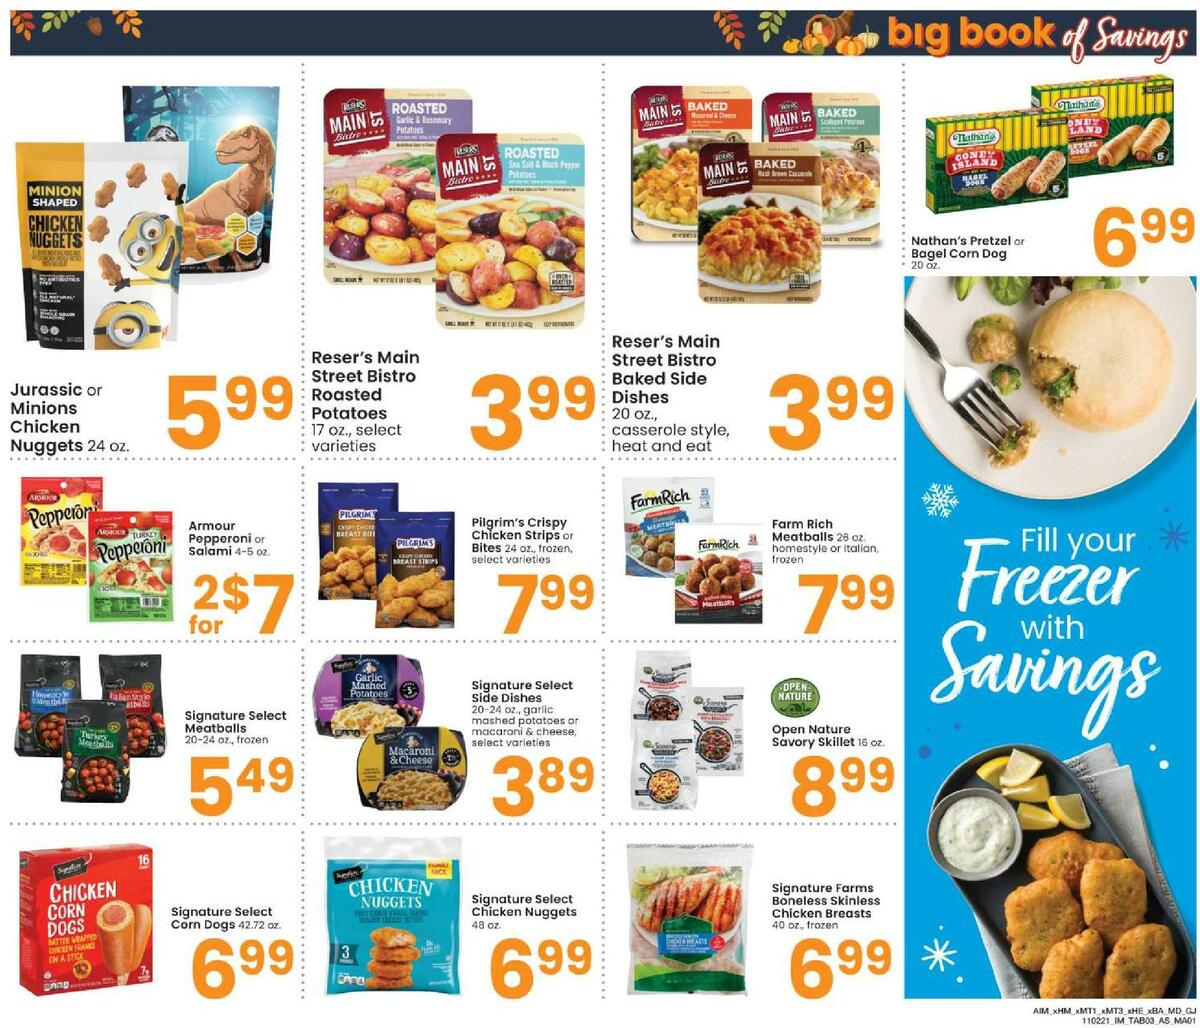 Albertsons Big Book of Savings Weekly Ad from November 2